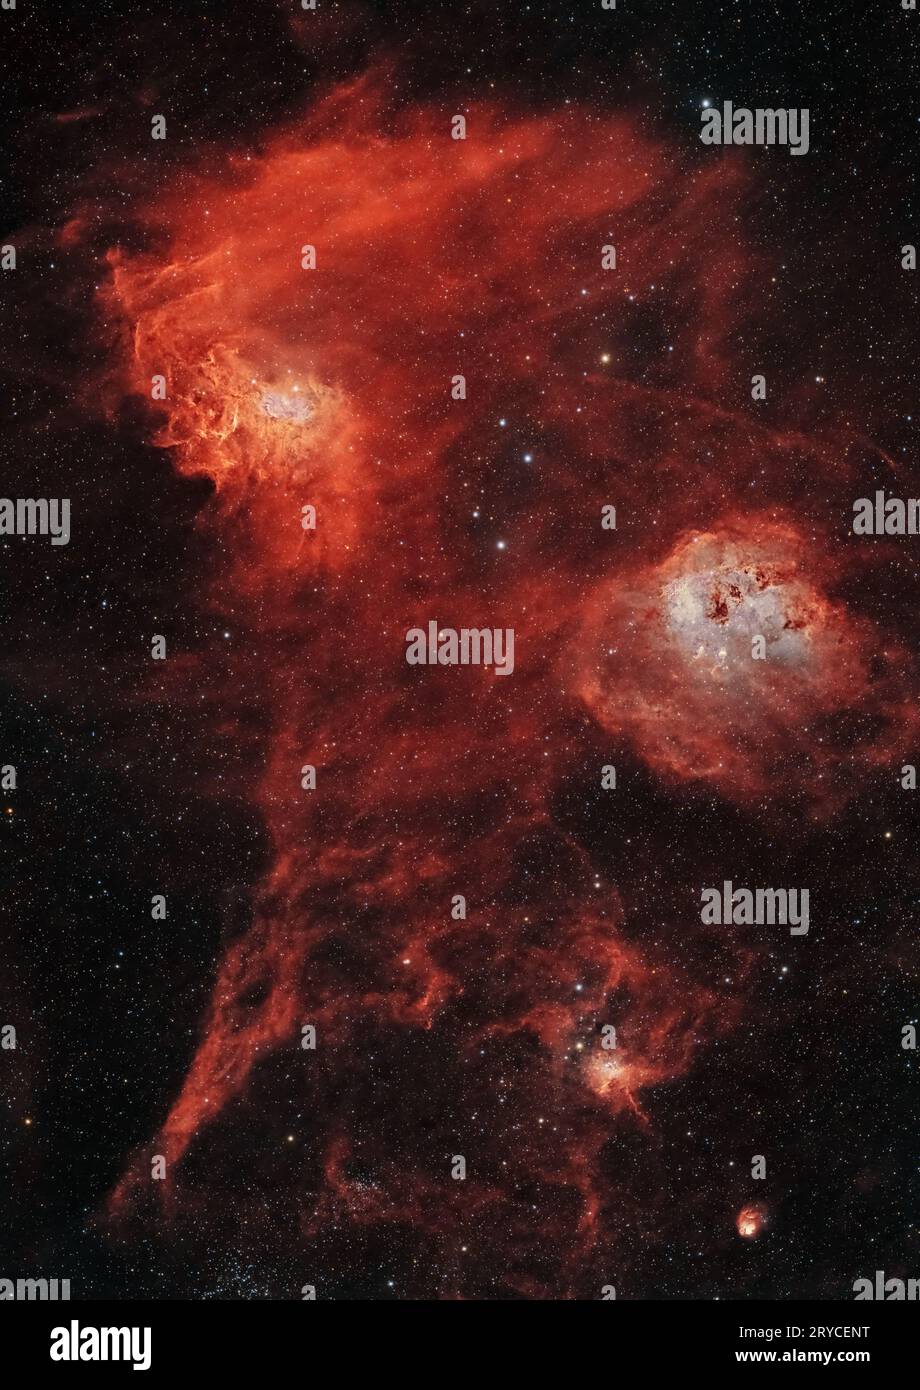 Nebulae in Auriga: Una Sinfonia cosmica. Tuffati nell'intricata danza di Flaming Star, Tadpole, Spider and Fly Nebulae Foraxx Foto Stock